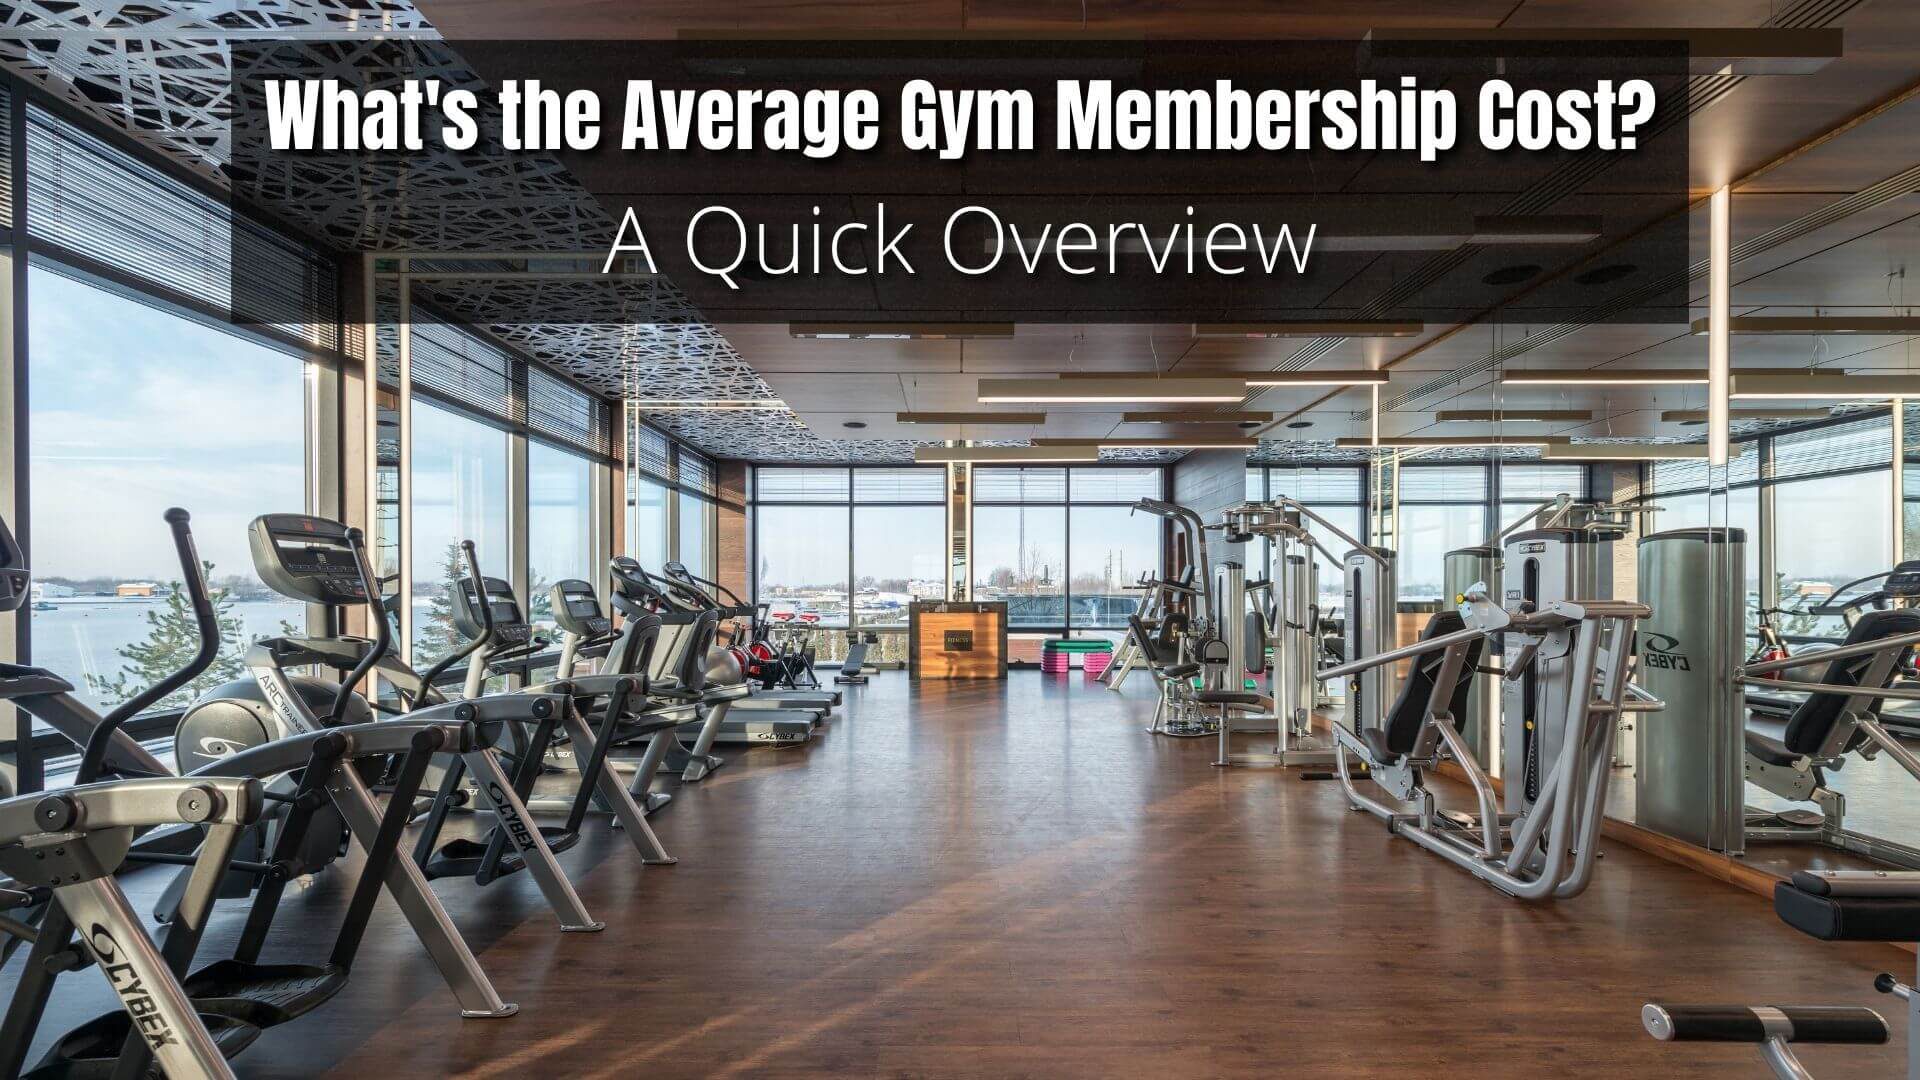 Gym Memberships, As Low As $10